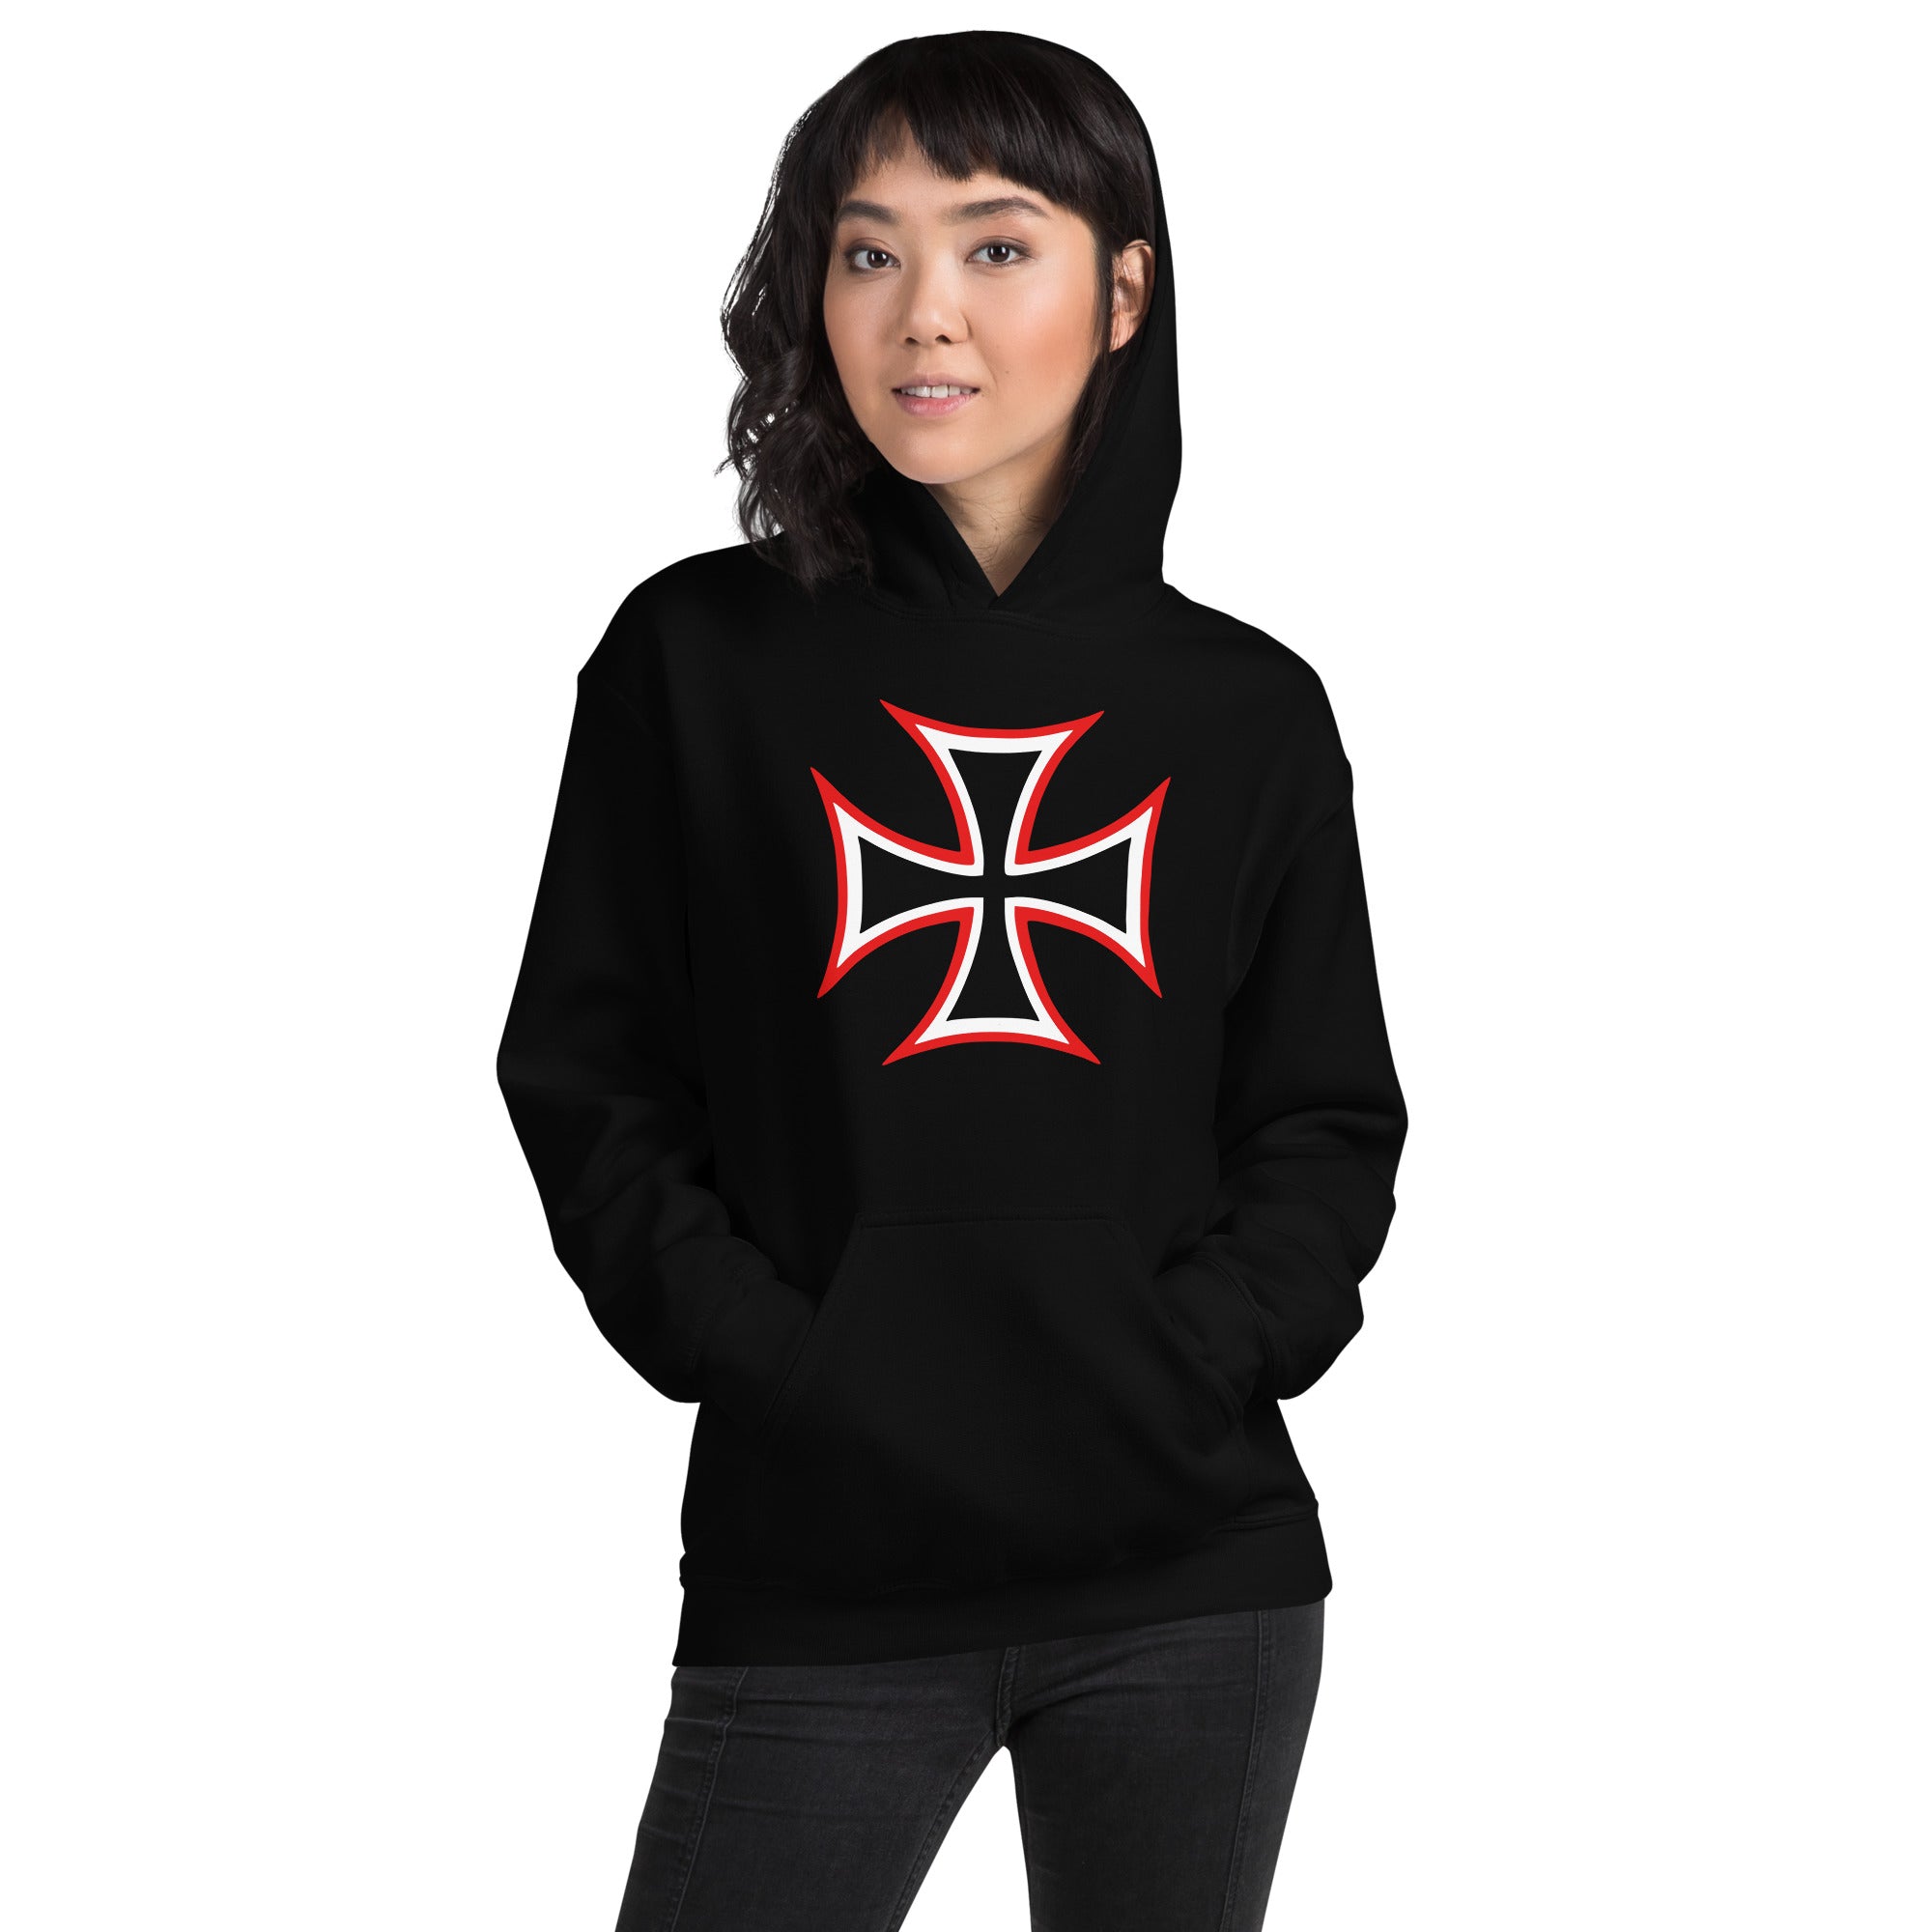 Red and White Occult Biker Cross Symbol Unisex Hoodie Sweatshirt